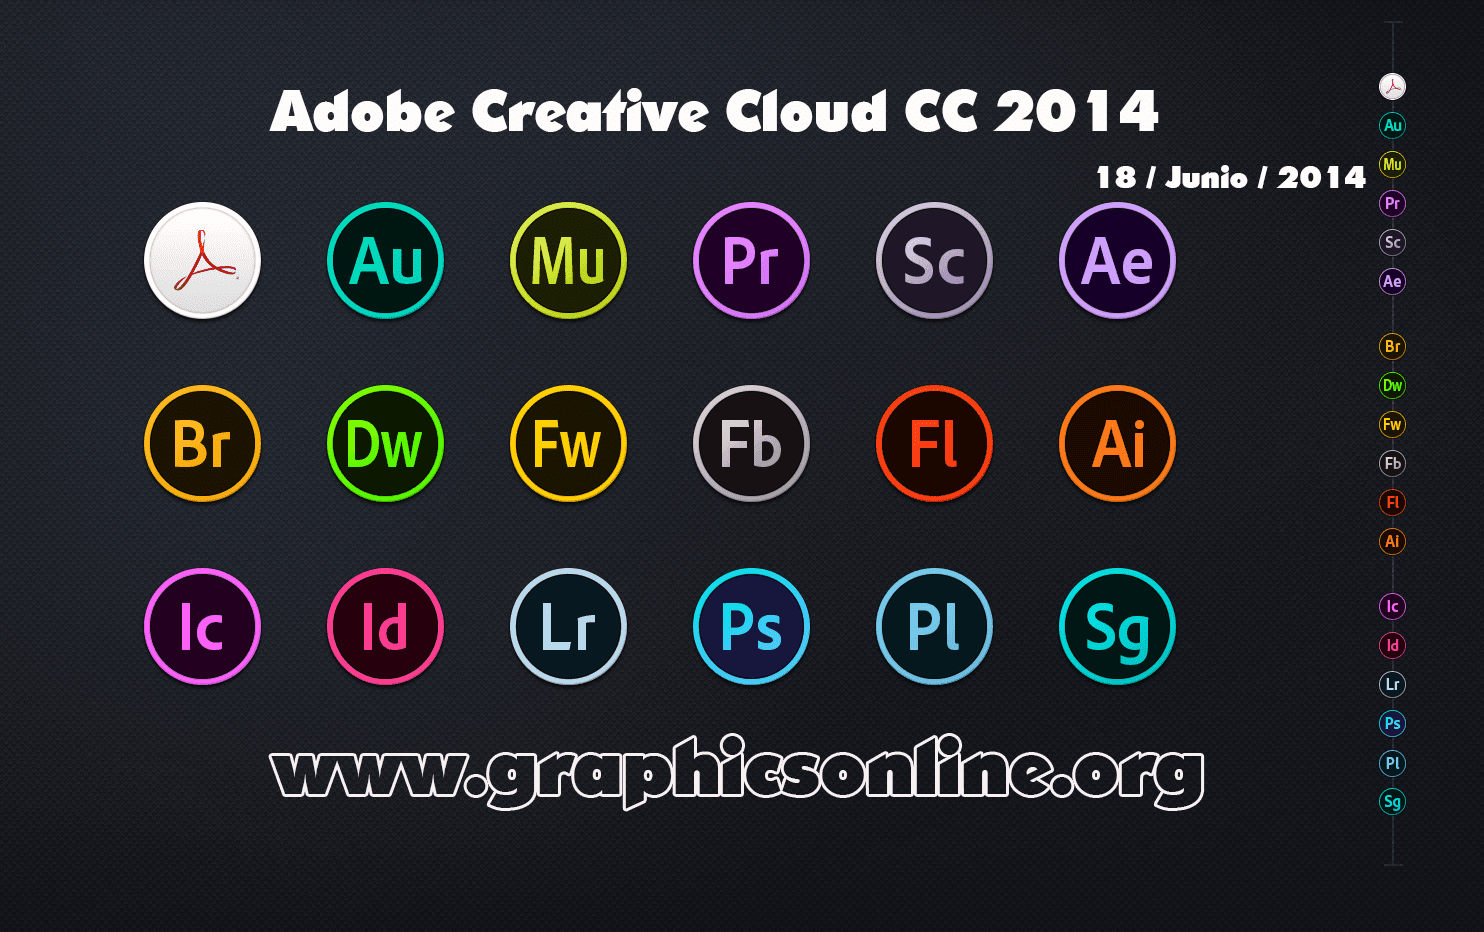 Adobe Photoshop Cc 2014 Crack Mac